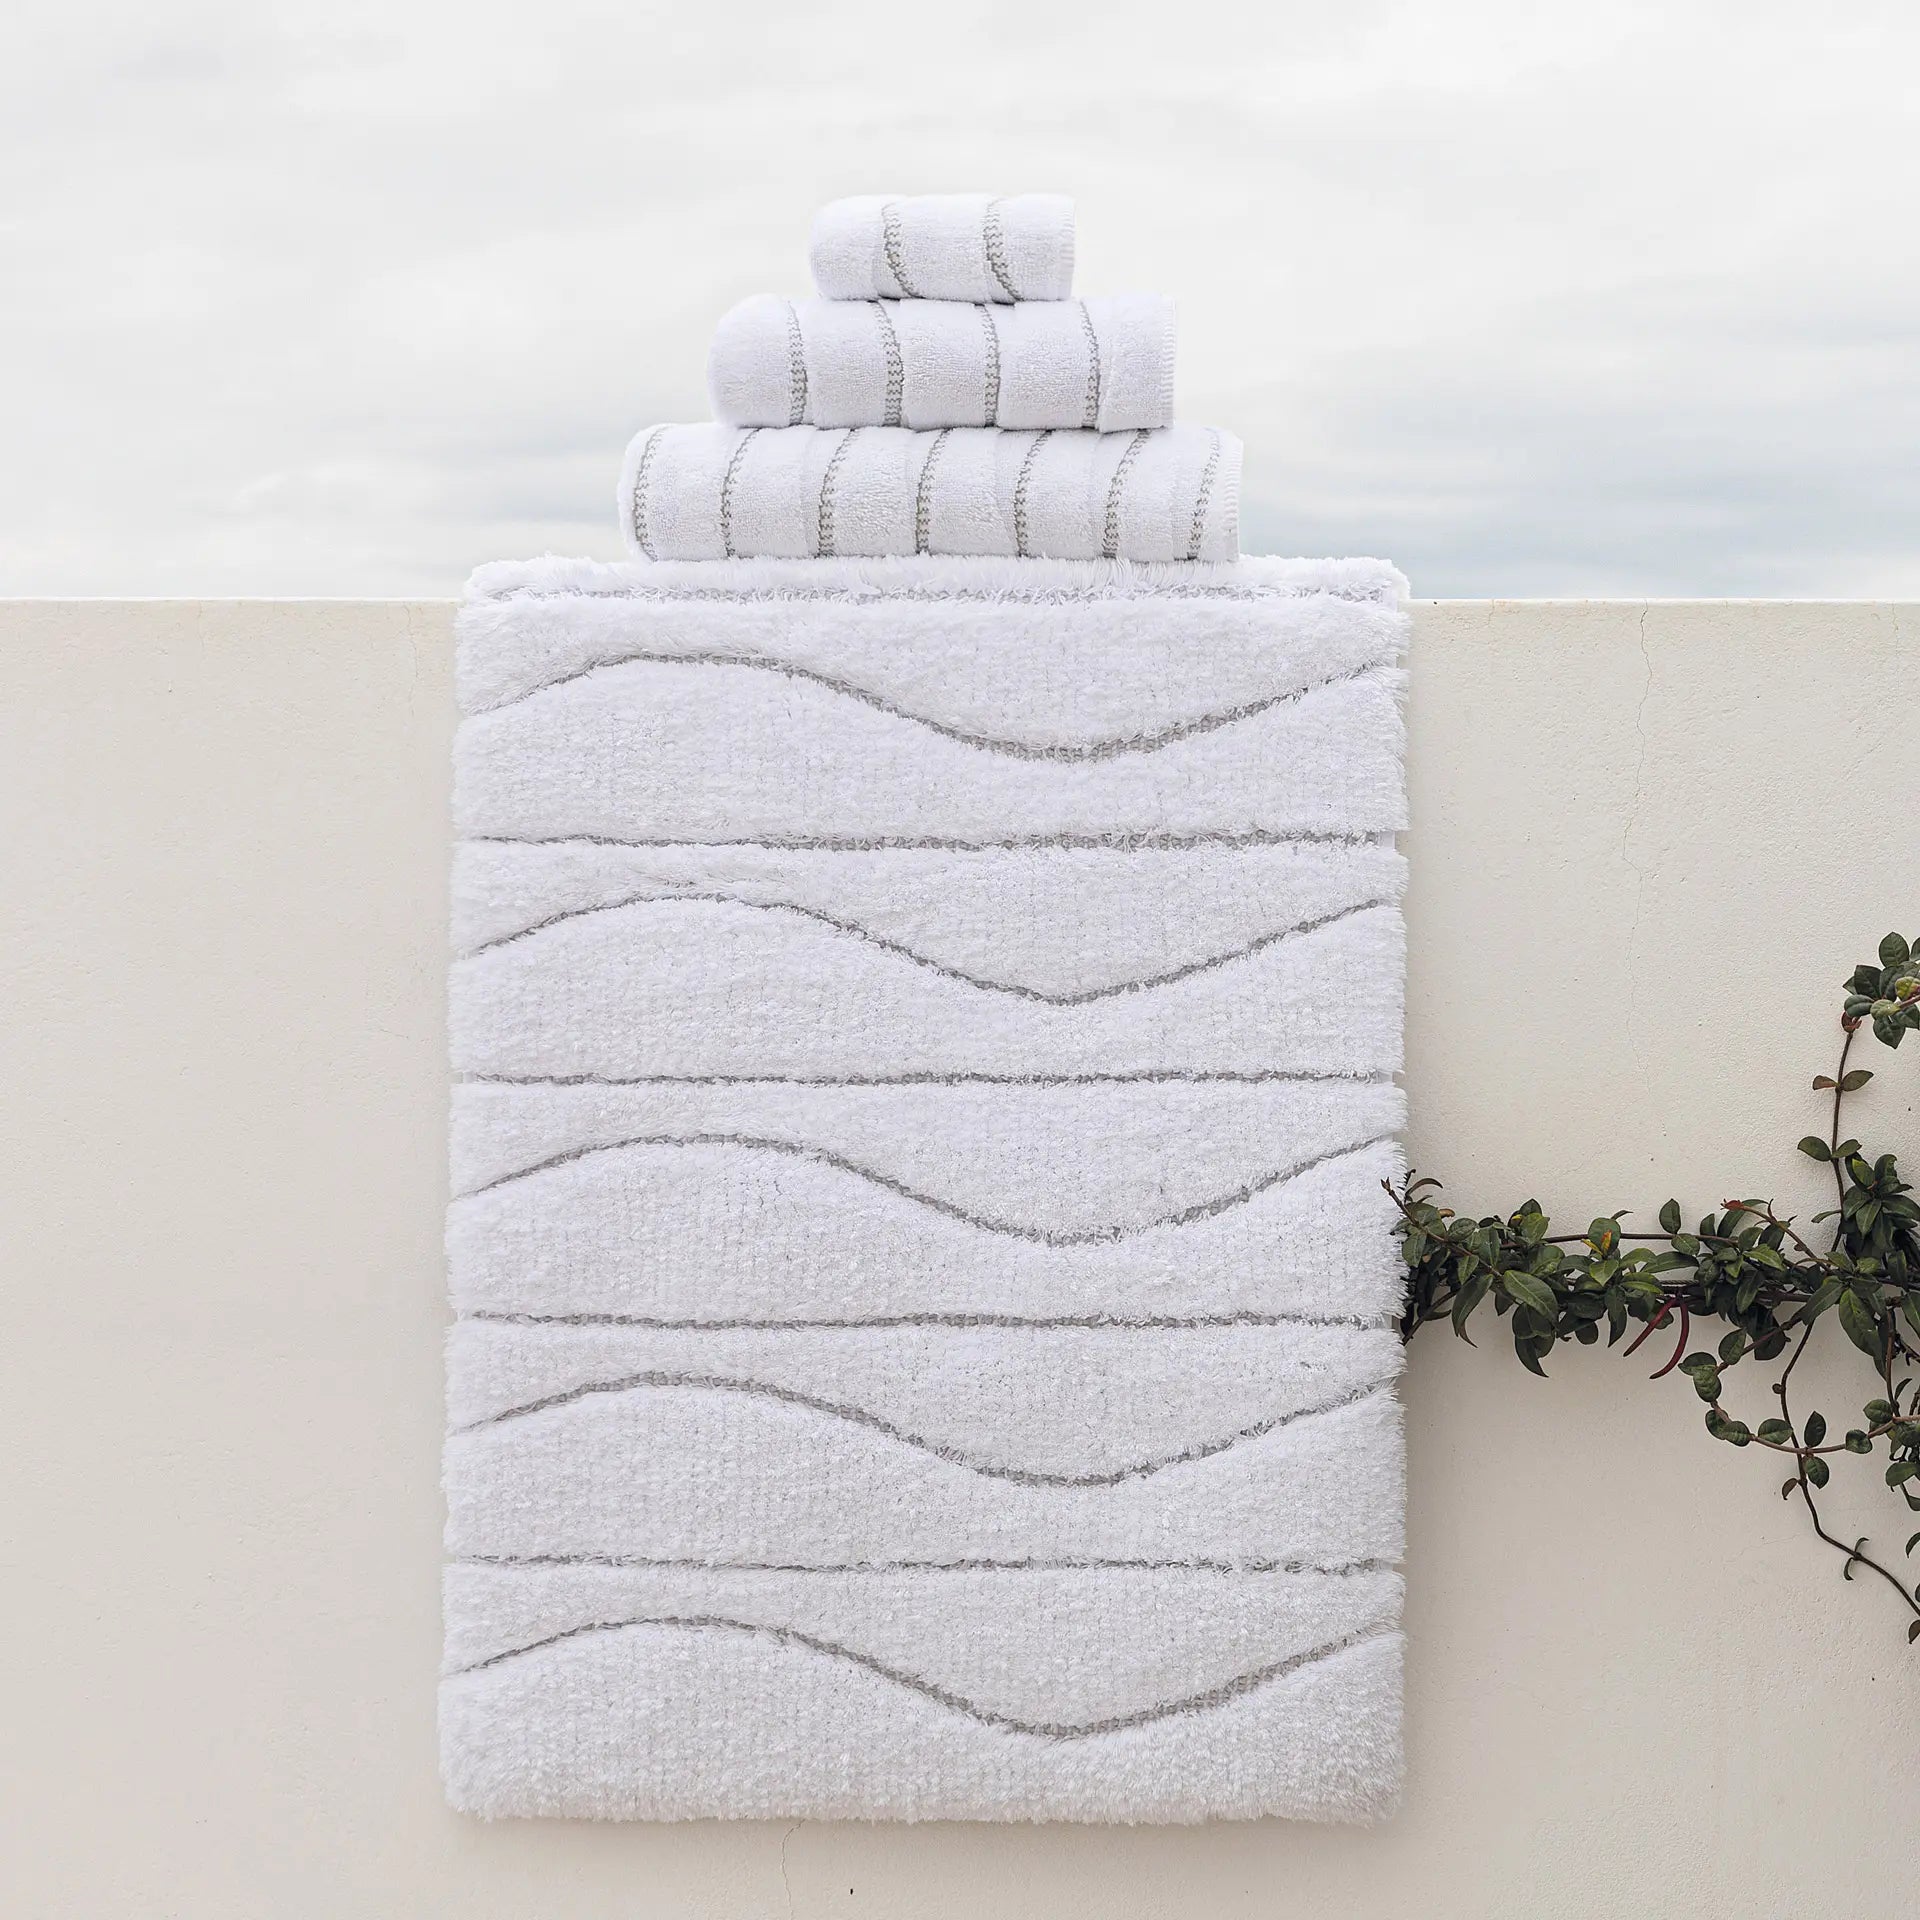 Graccioza Opera Bath Rug and Towels set outside on a ledge